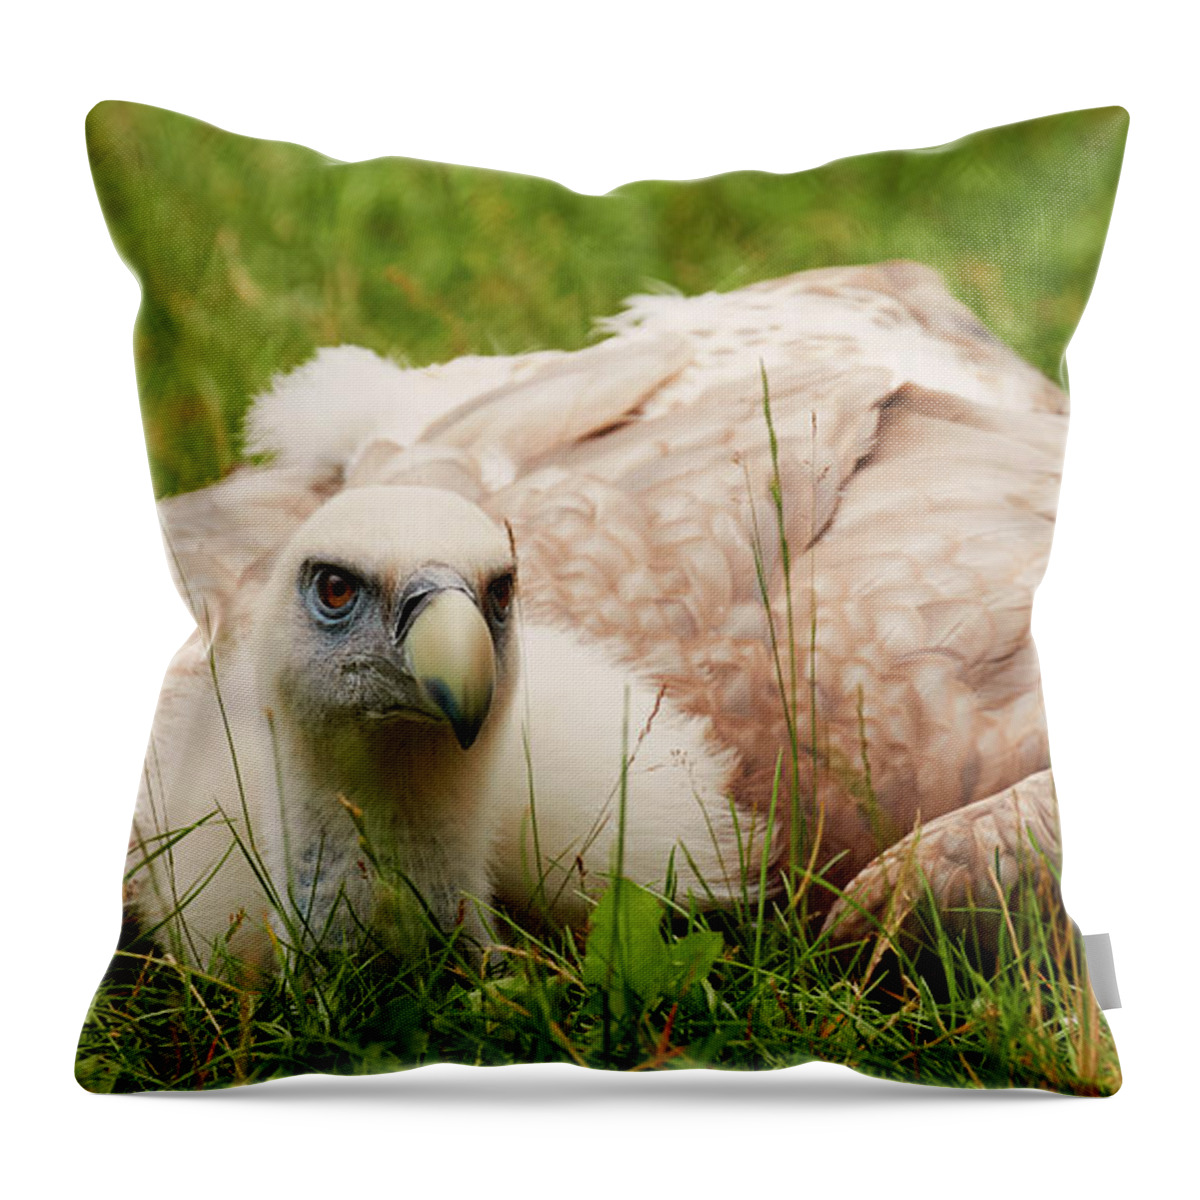 Griffon Throw Pillow featuring the photograph Griffon vulture by Nick Biemans